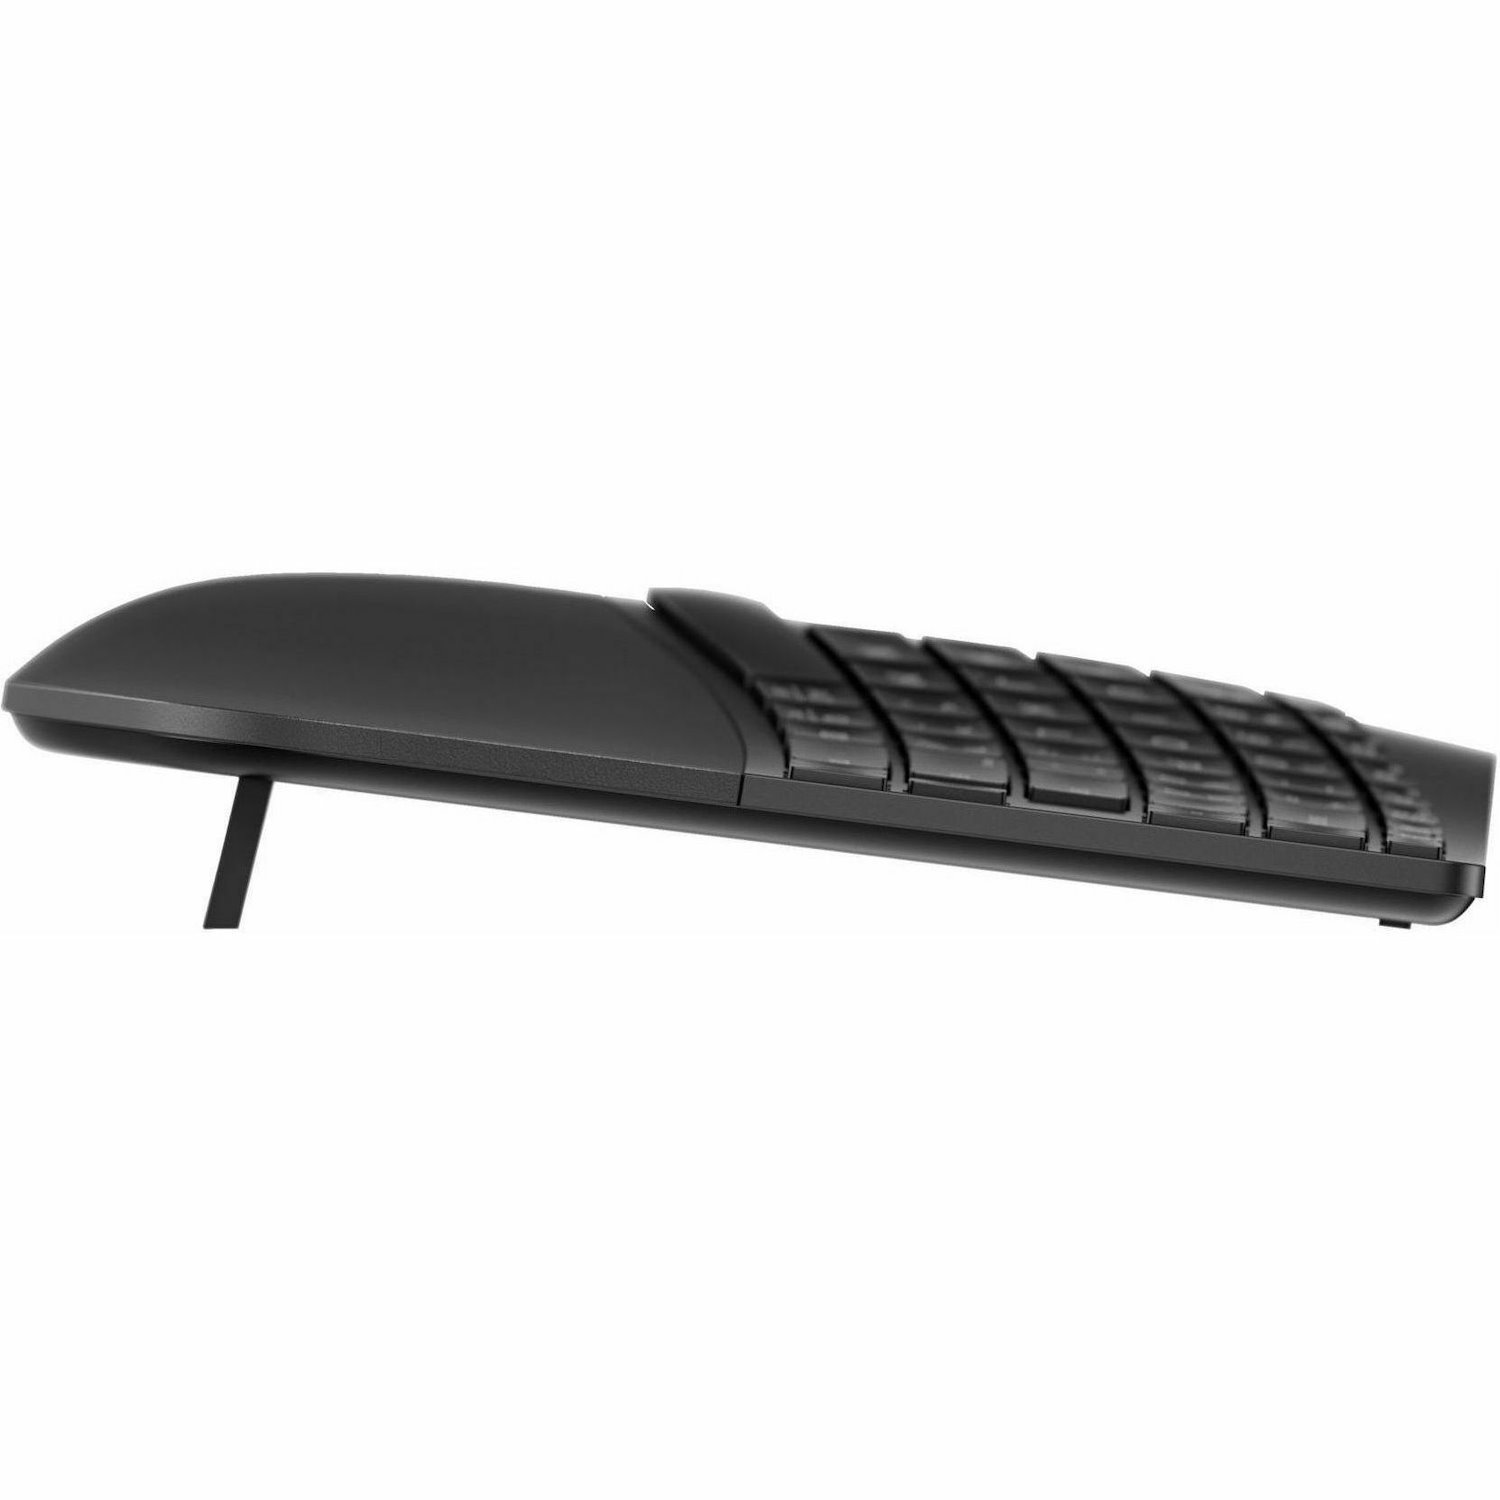 HP 965 Keyboard - Wireless Connectivity - USB Type A Interface - Black